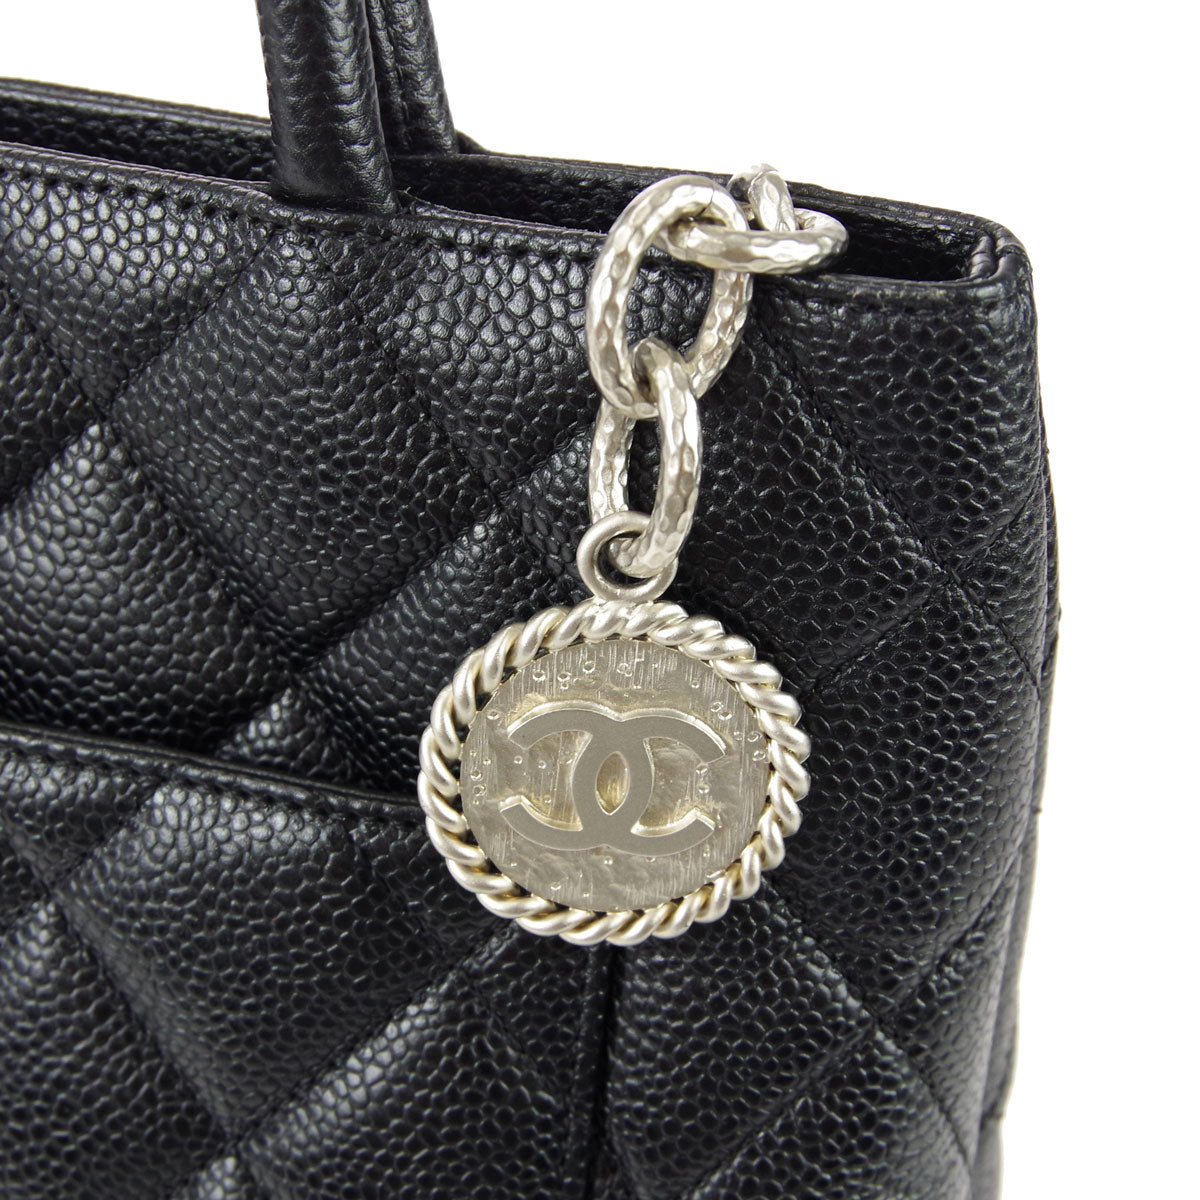 Chanel Medallion Quilted Tote Handbag Black Caviar